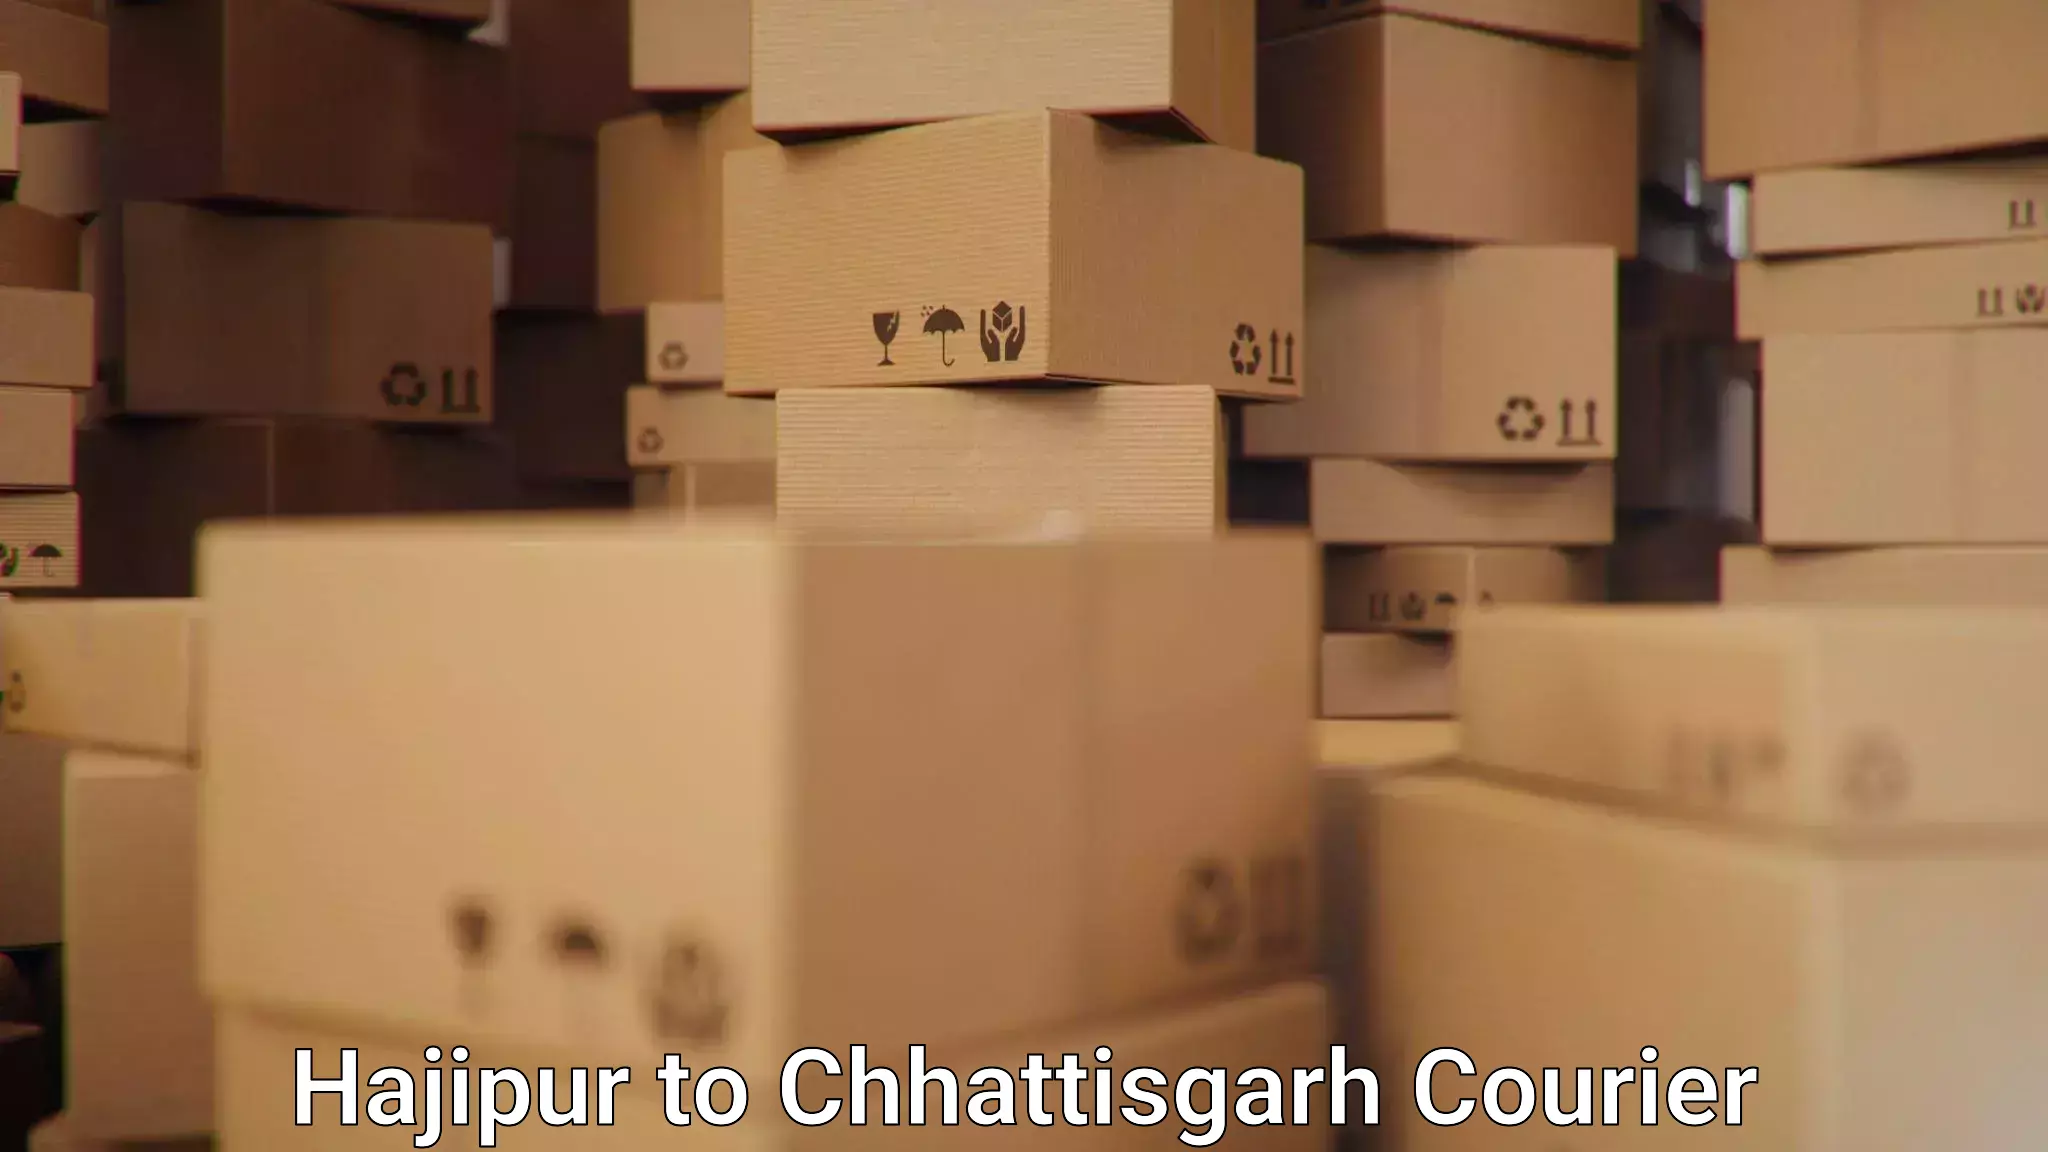 Reliable delivery network Hajipur to Patna Chhattisgarh